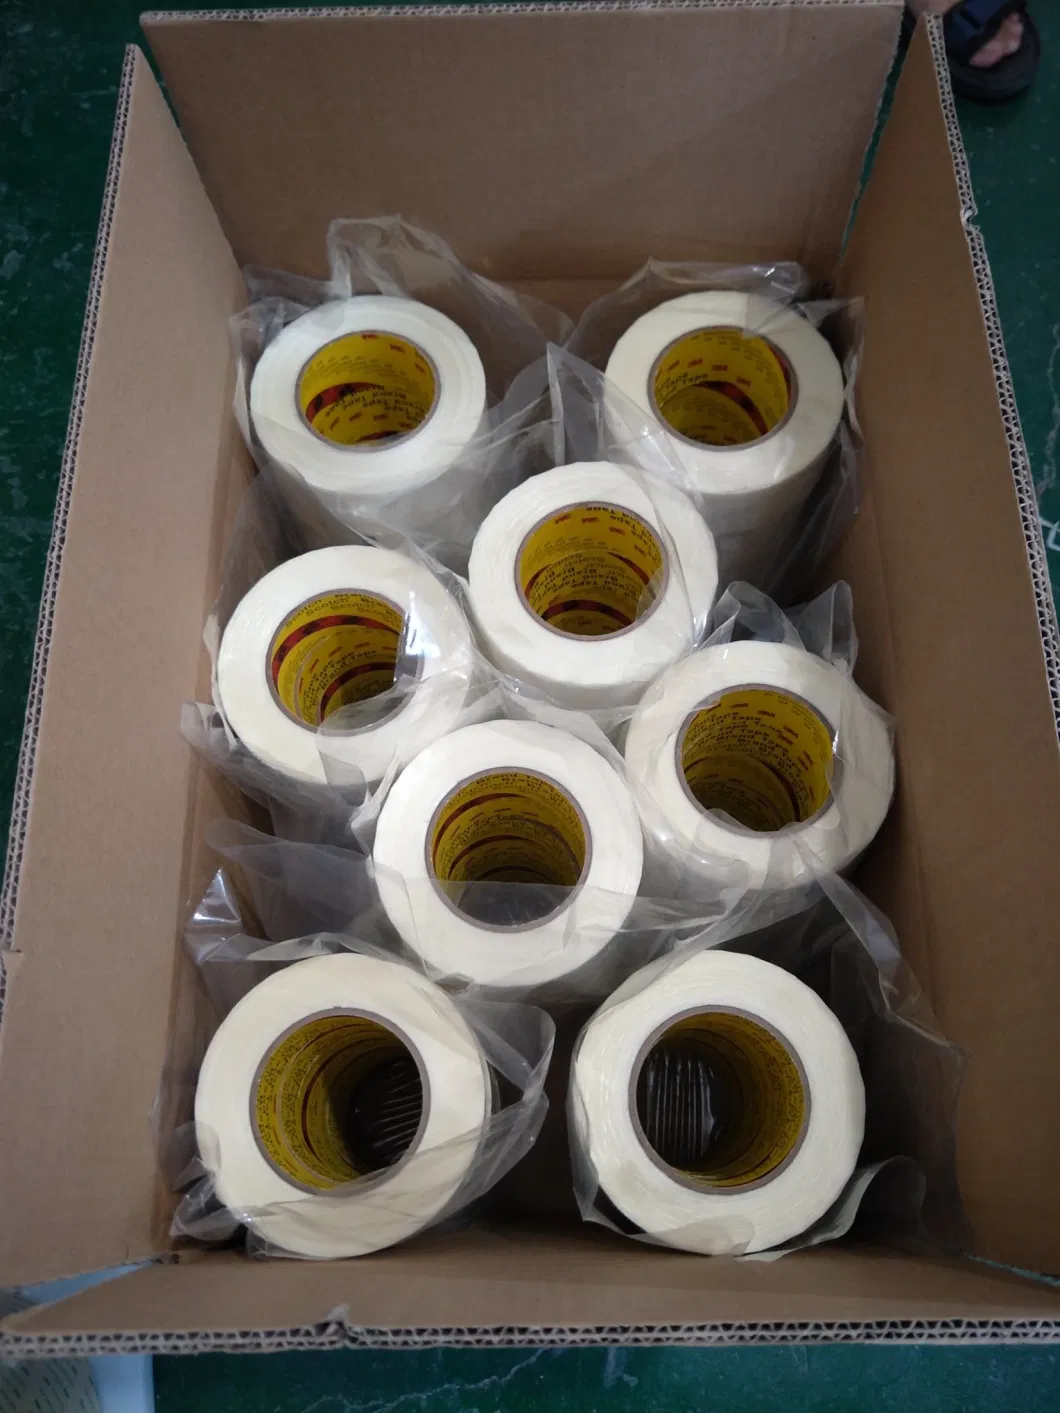 Fiberglass Filament Tape 3m 893/897 Strapping Tape for Carton Box Packing